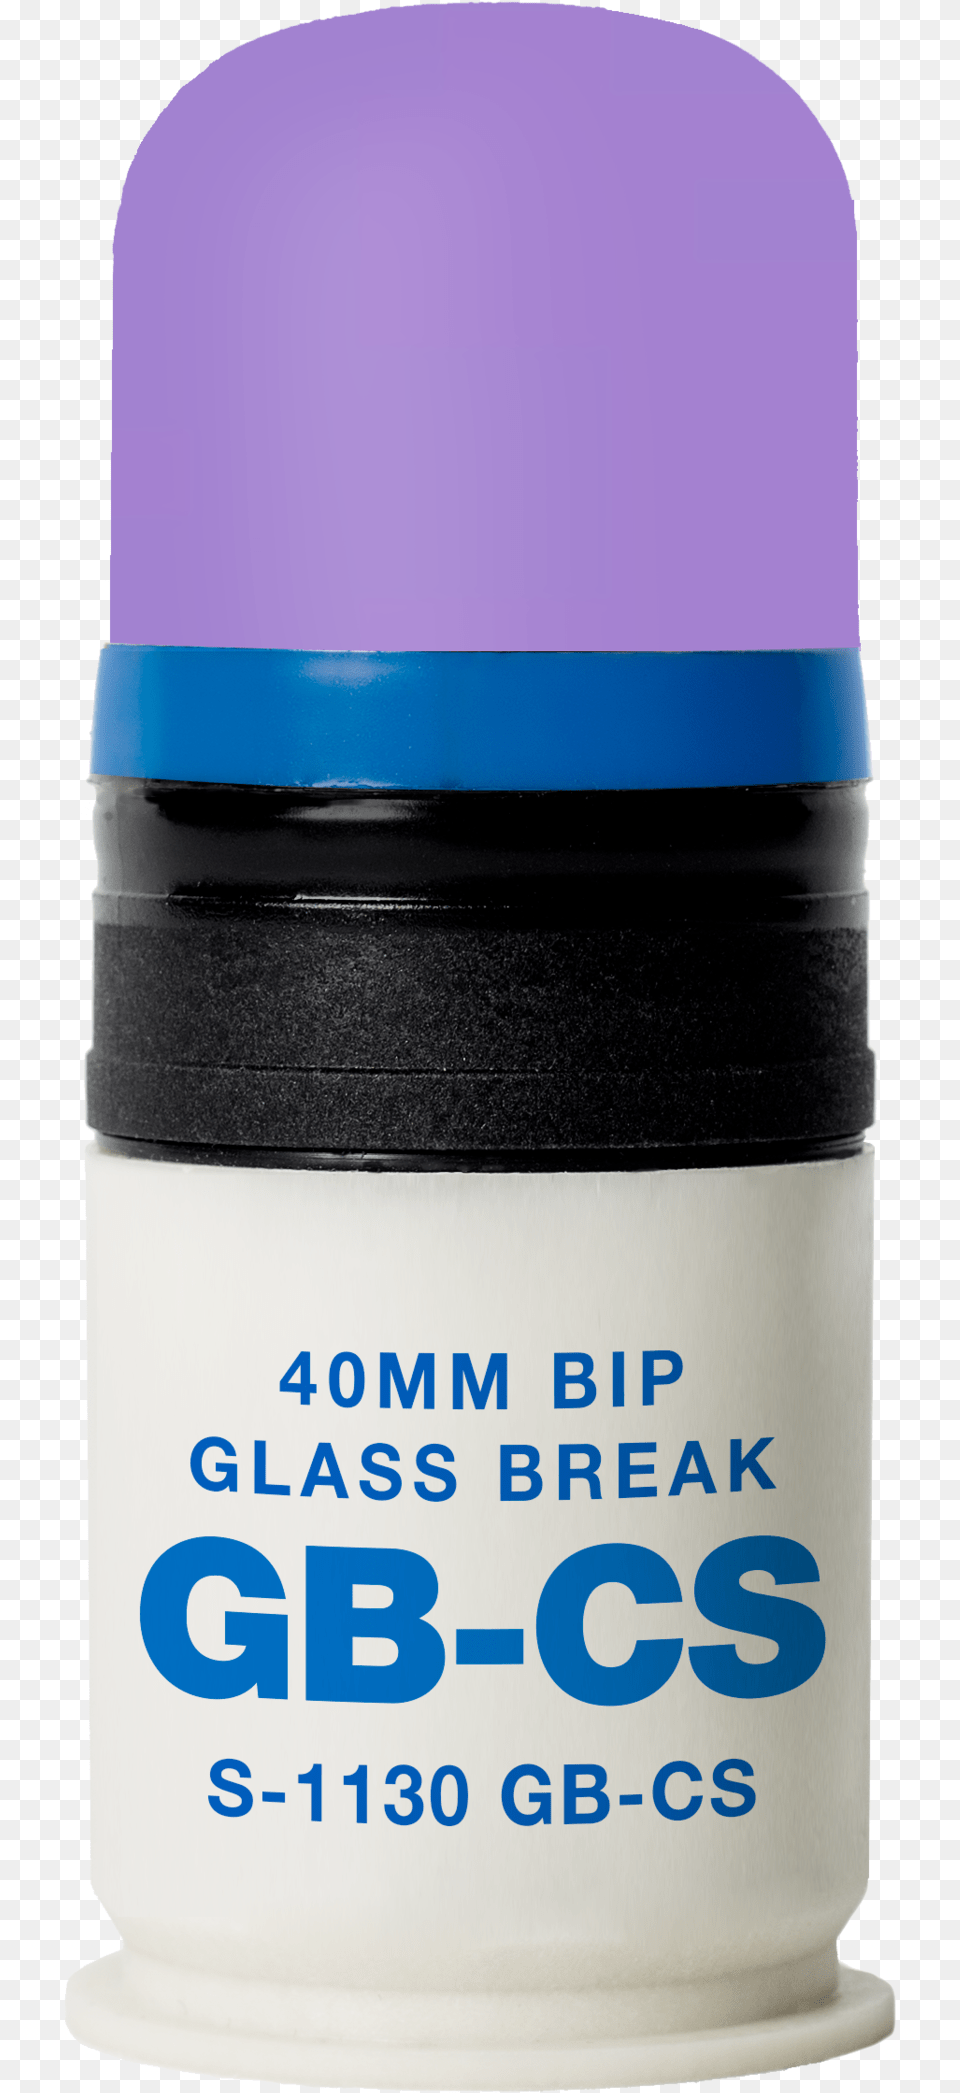 Bip Glass Break Cs 59b93f2e48cd0 Business, Cosmetics, Deodorant, Tape, Bottle Png